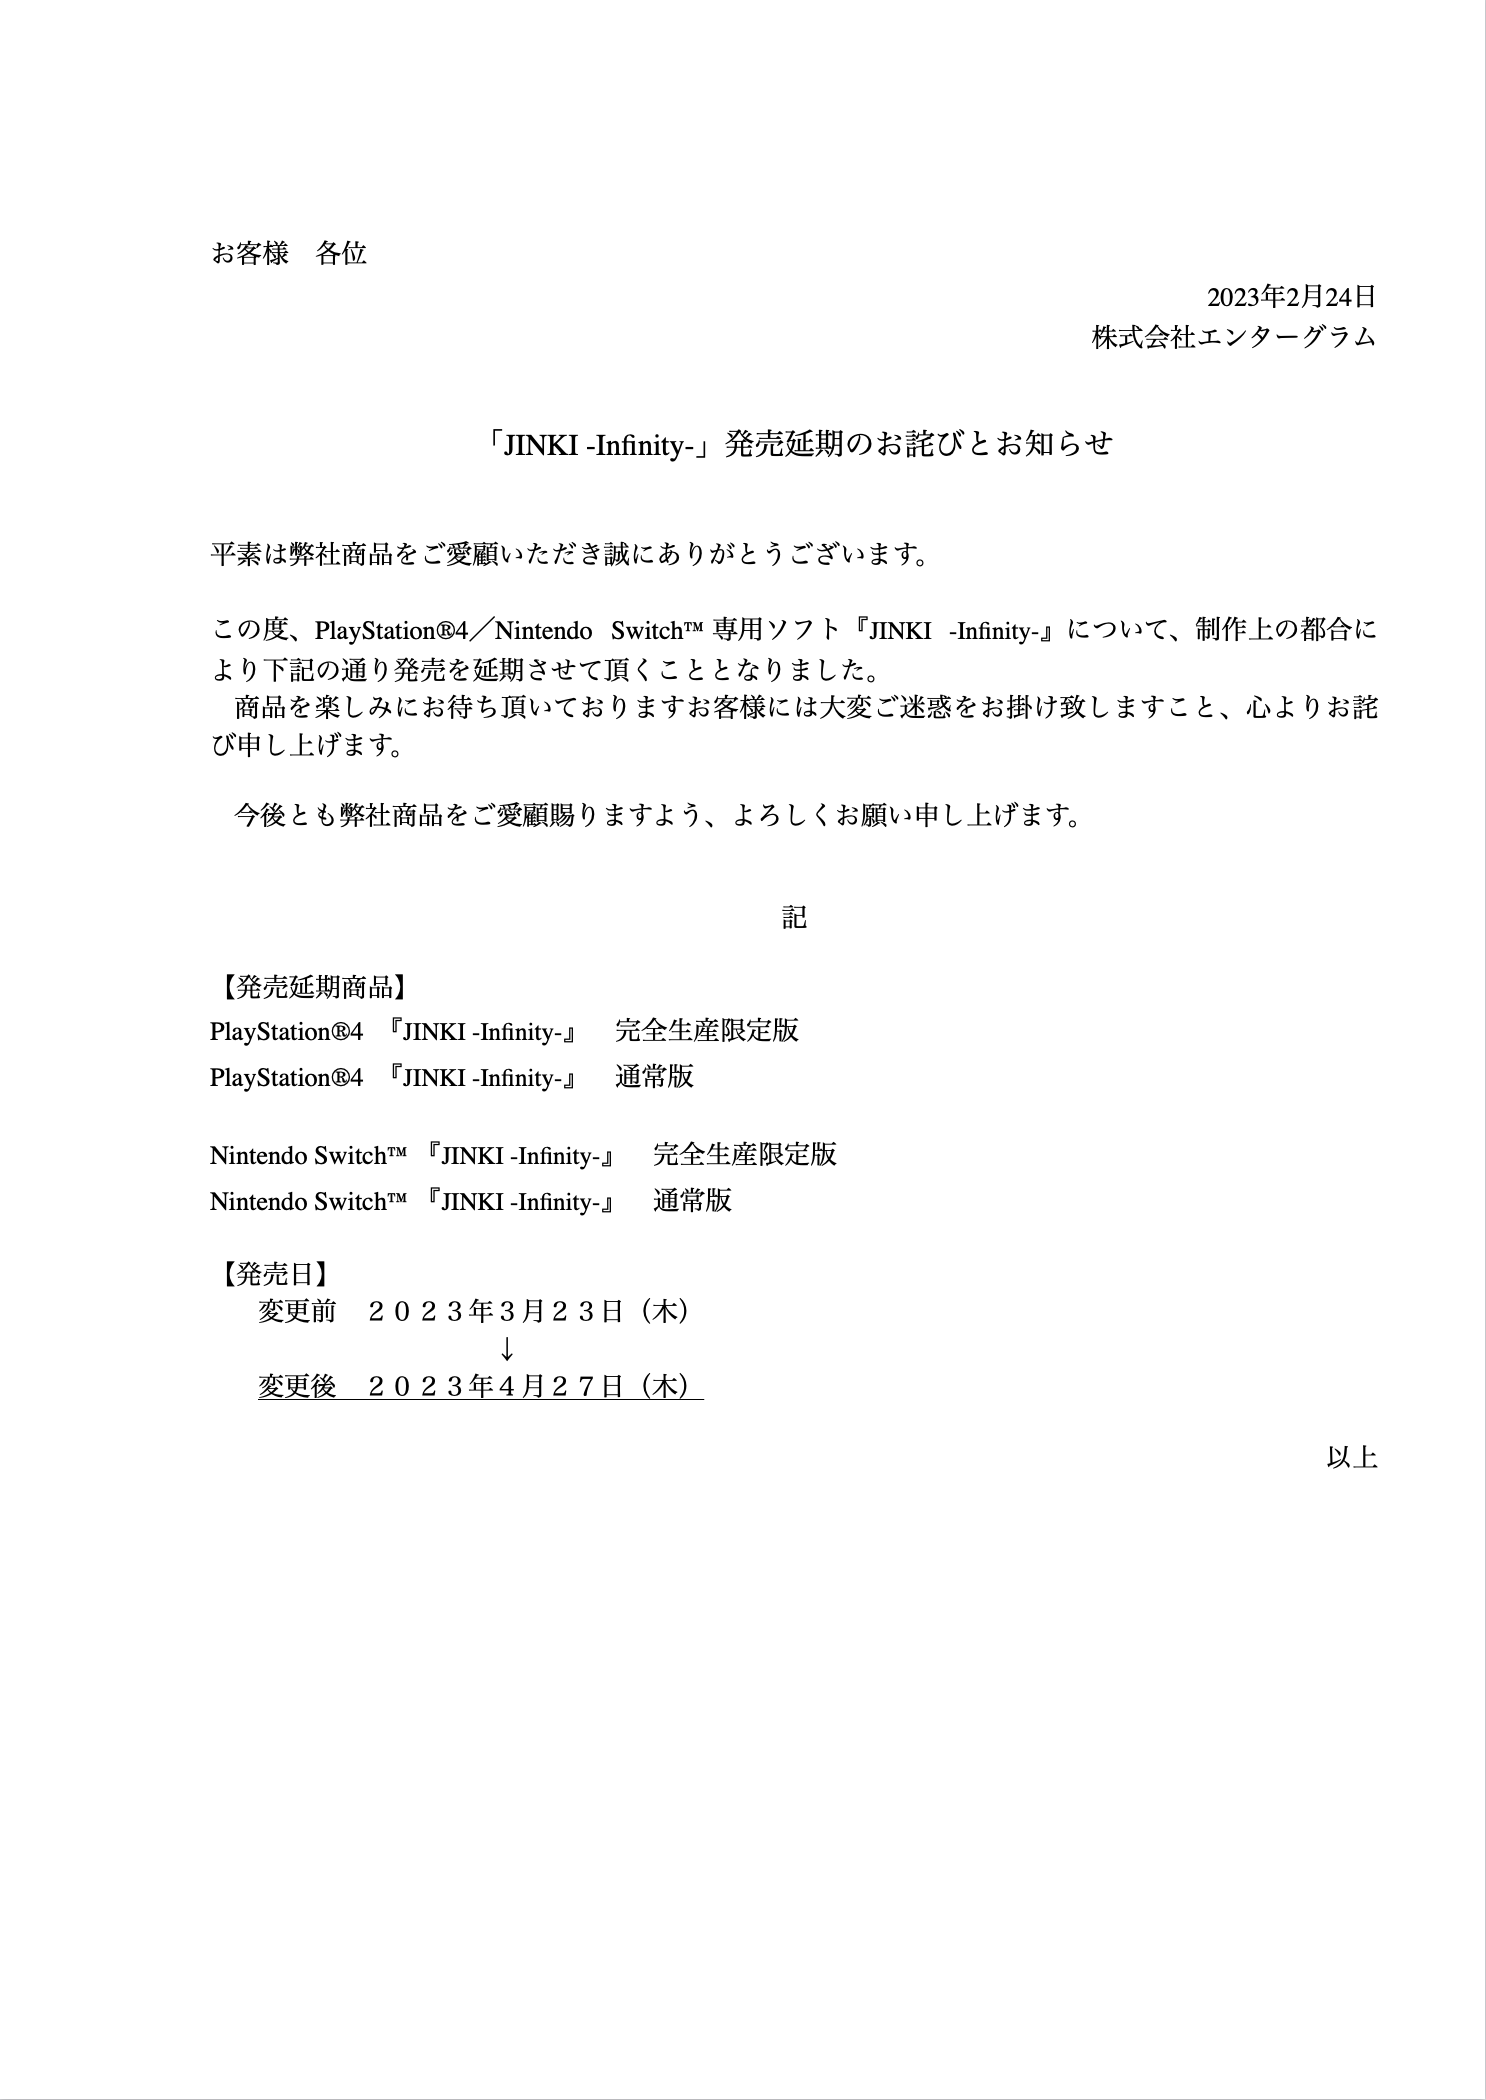 JINKI -Infinity-の発売予定日再変更のお詫びとお知らせ